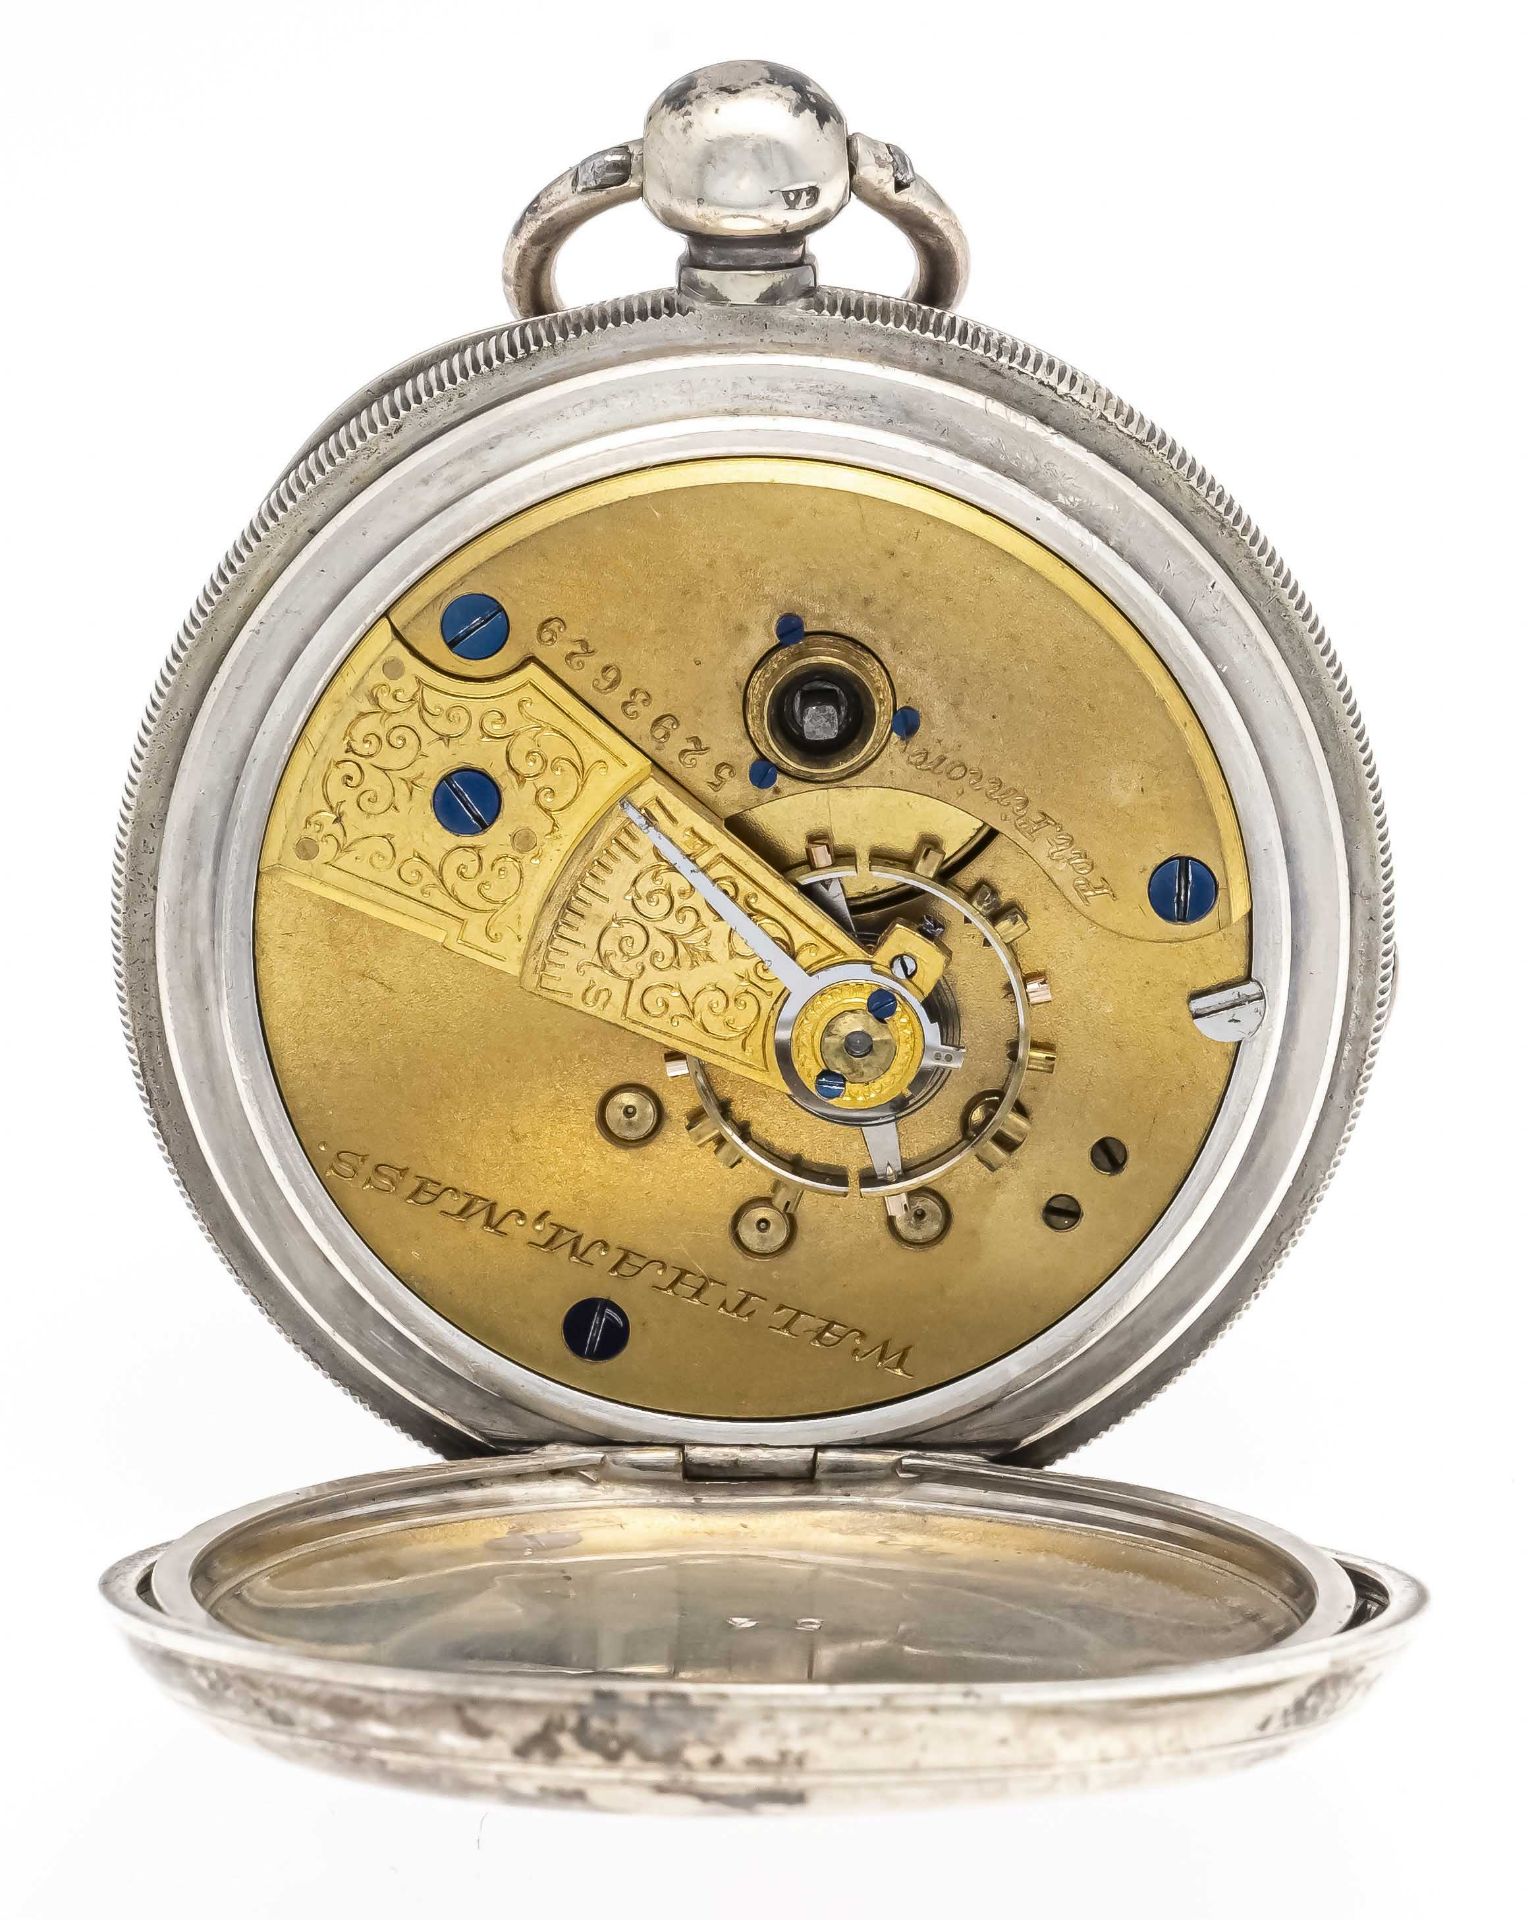 Pocket watch in pocket watch frame, silver, pocket watch by A.W.W. Co. & Waltham Mass, silver - Image 2 of 3